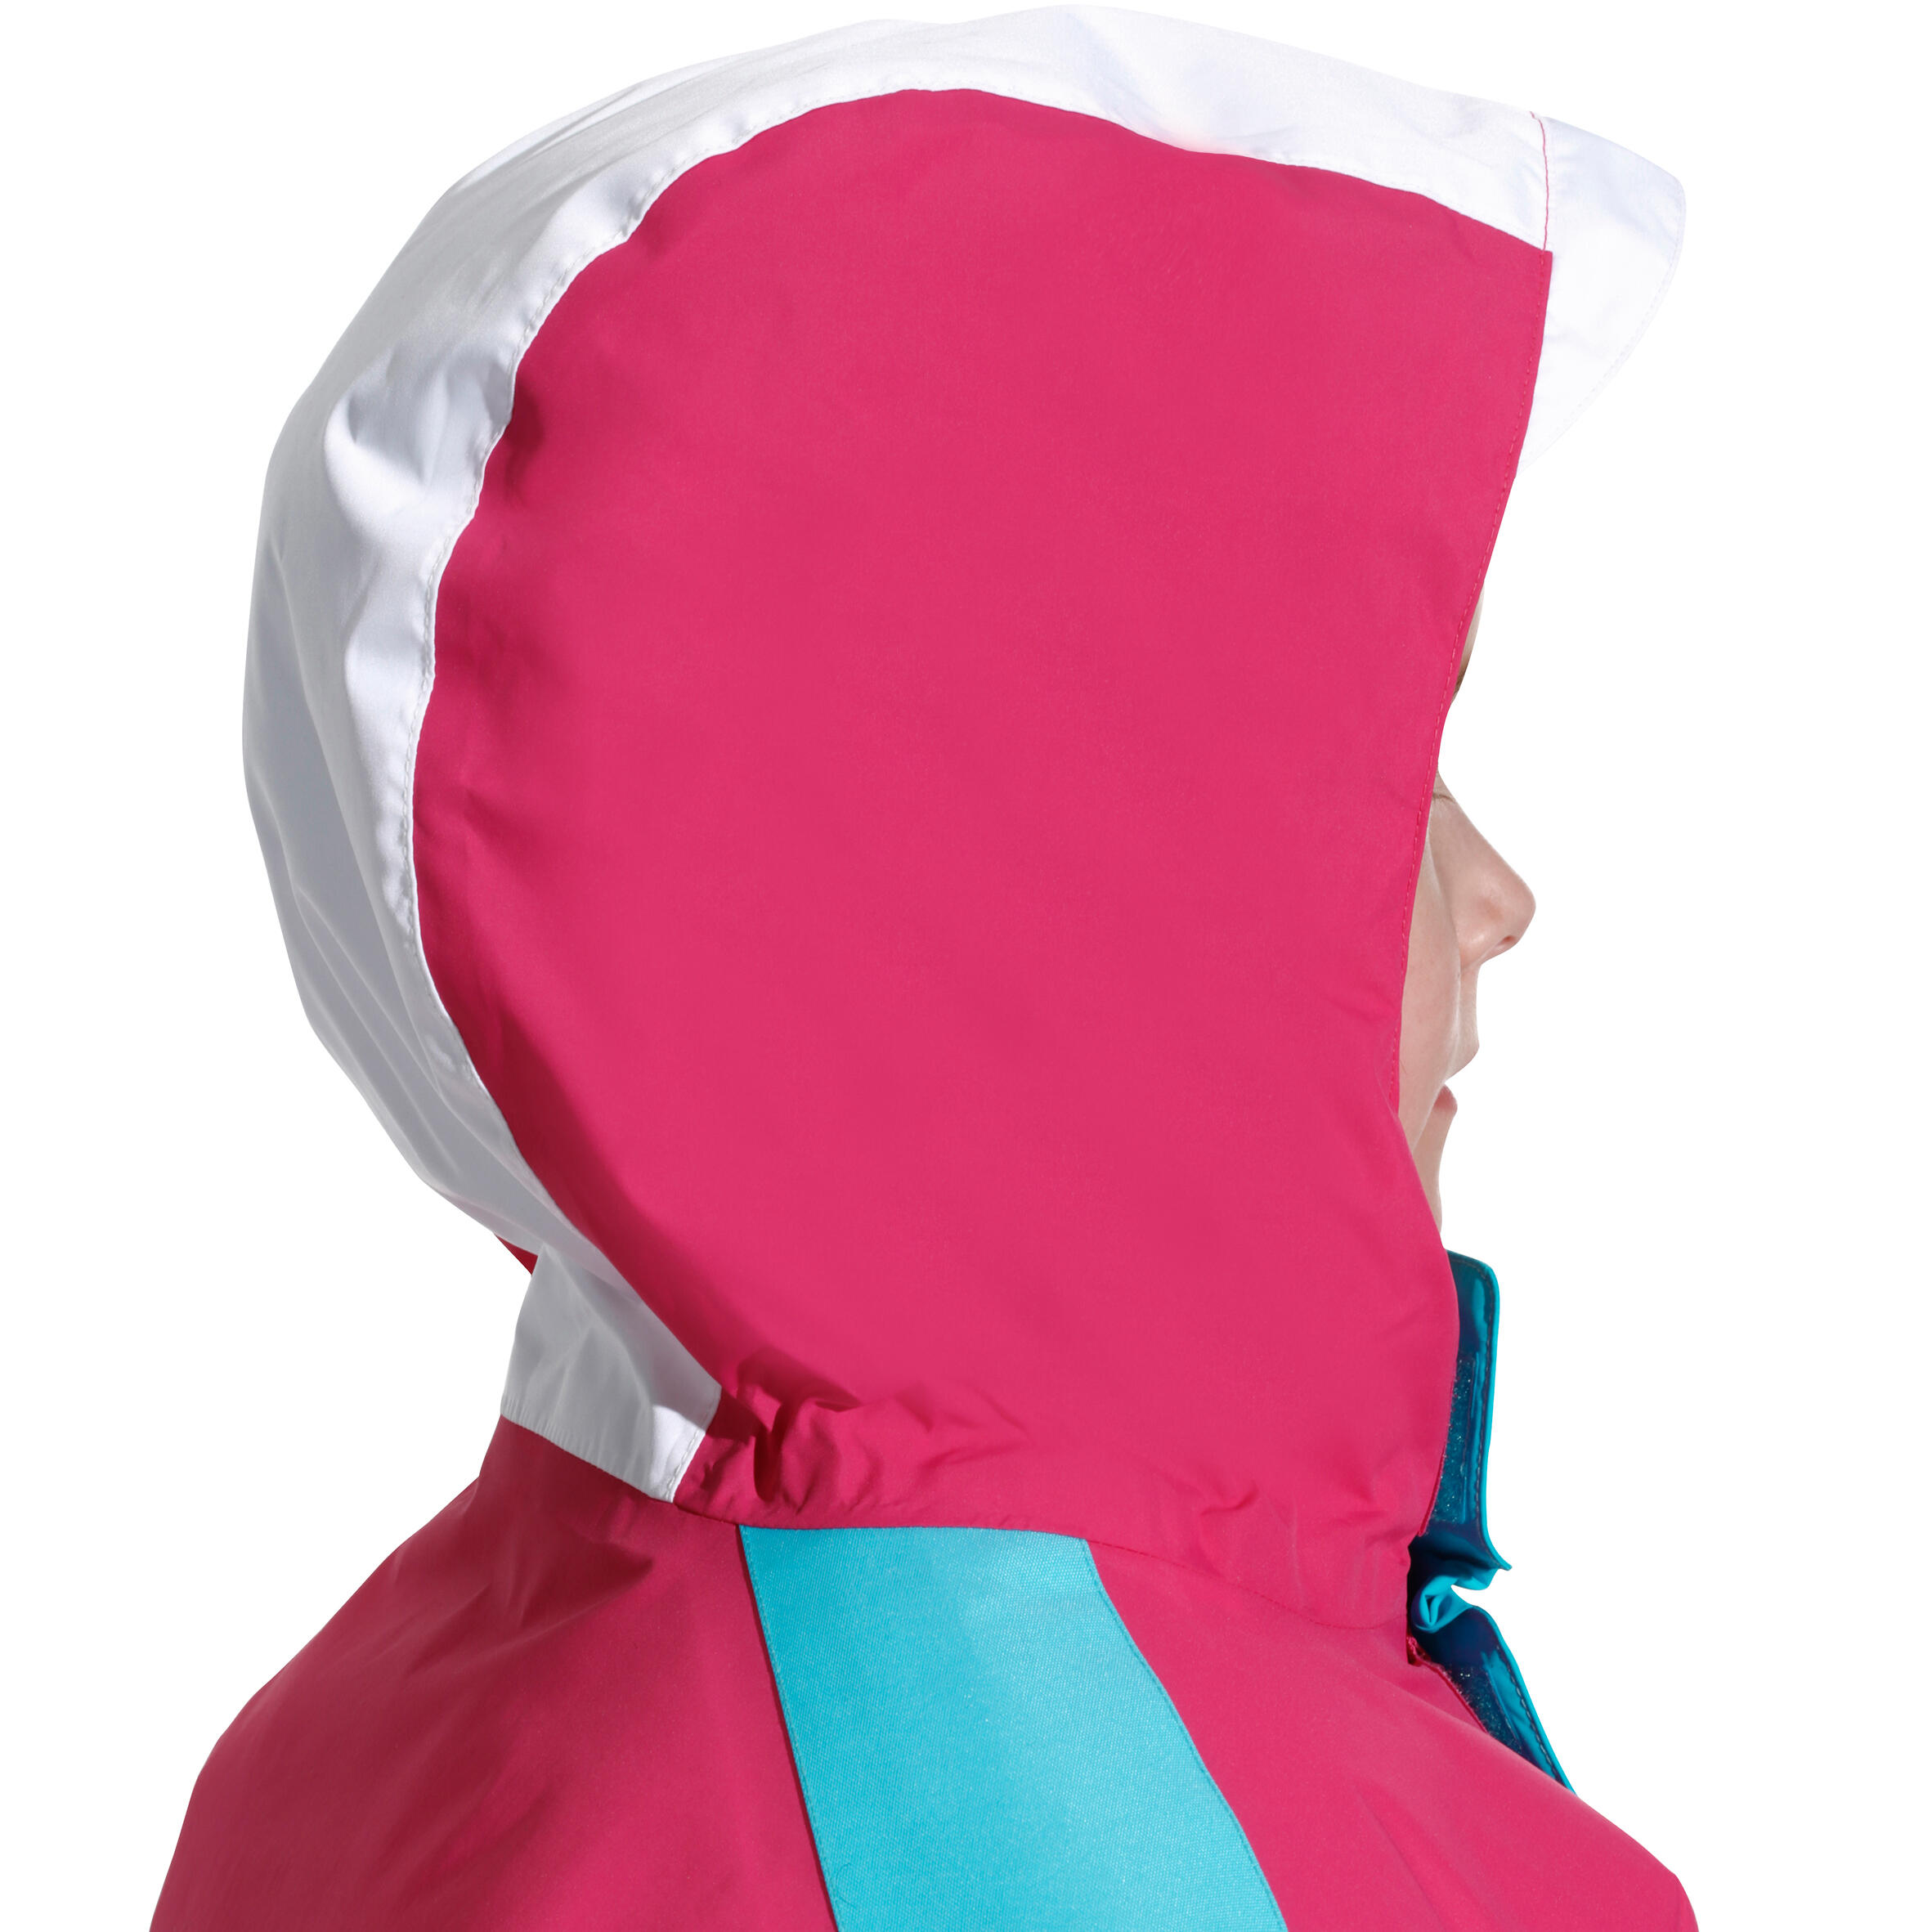 Slide 100 Girls' Ski Jacket - Pink/Blue/White WEDZE | Decathlon